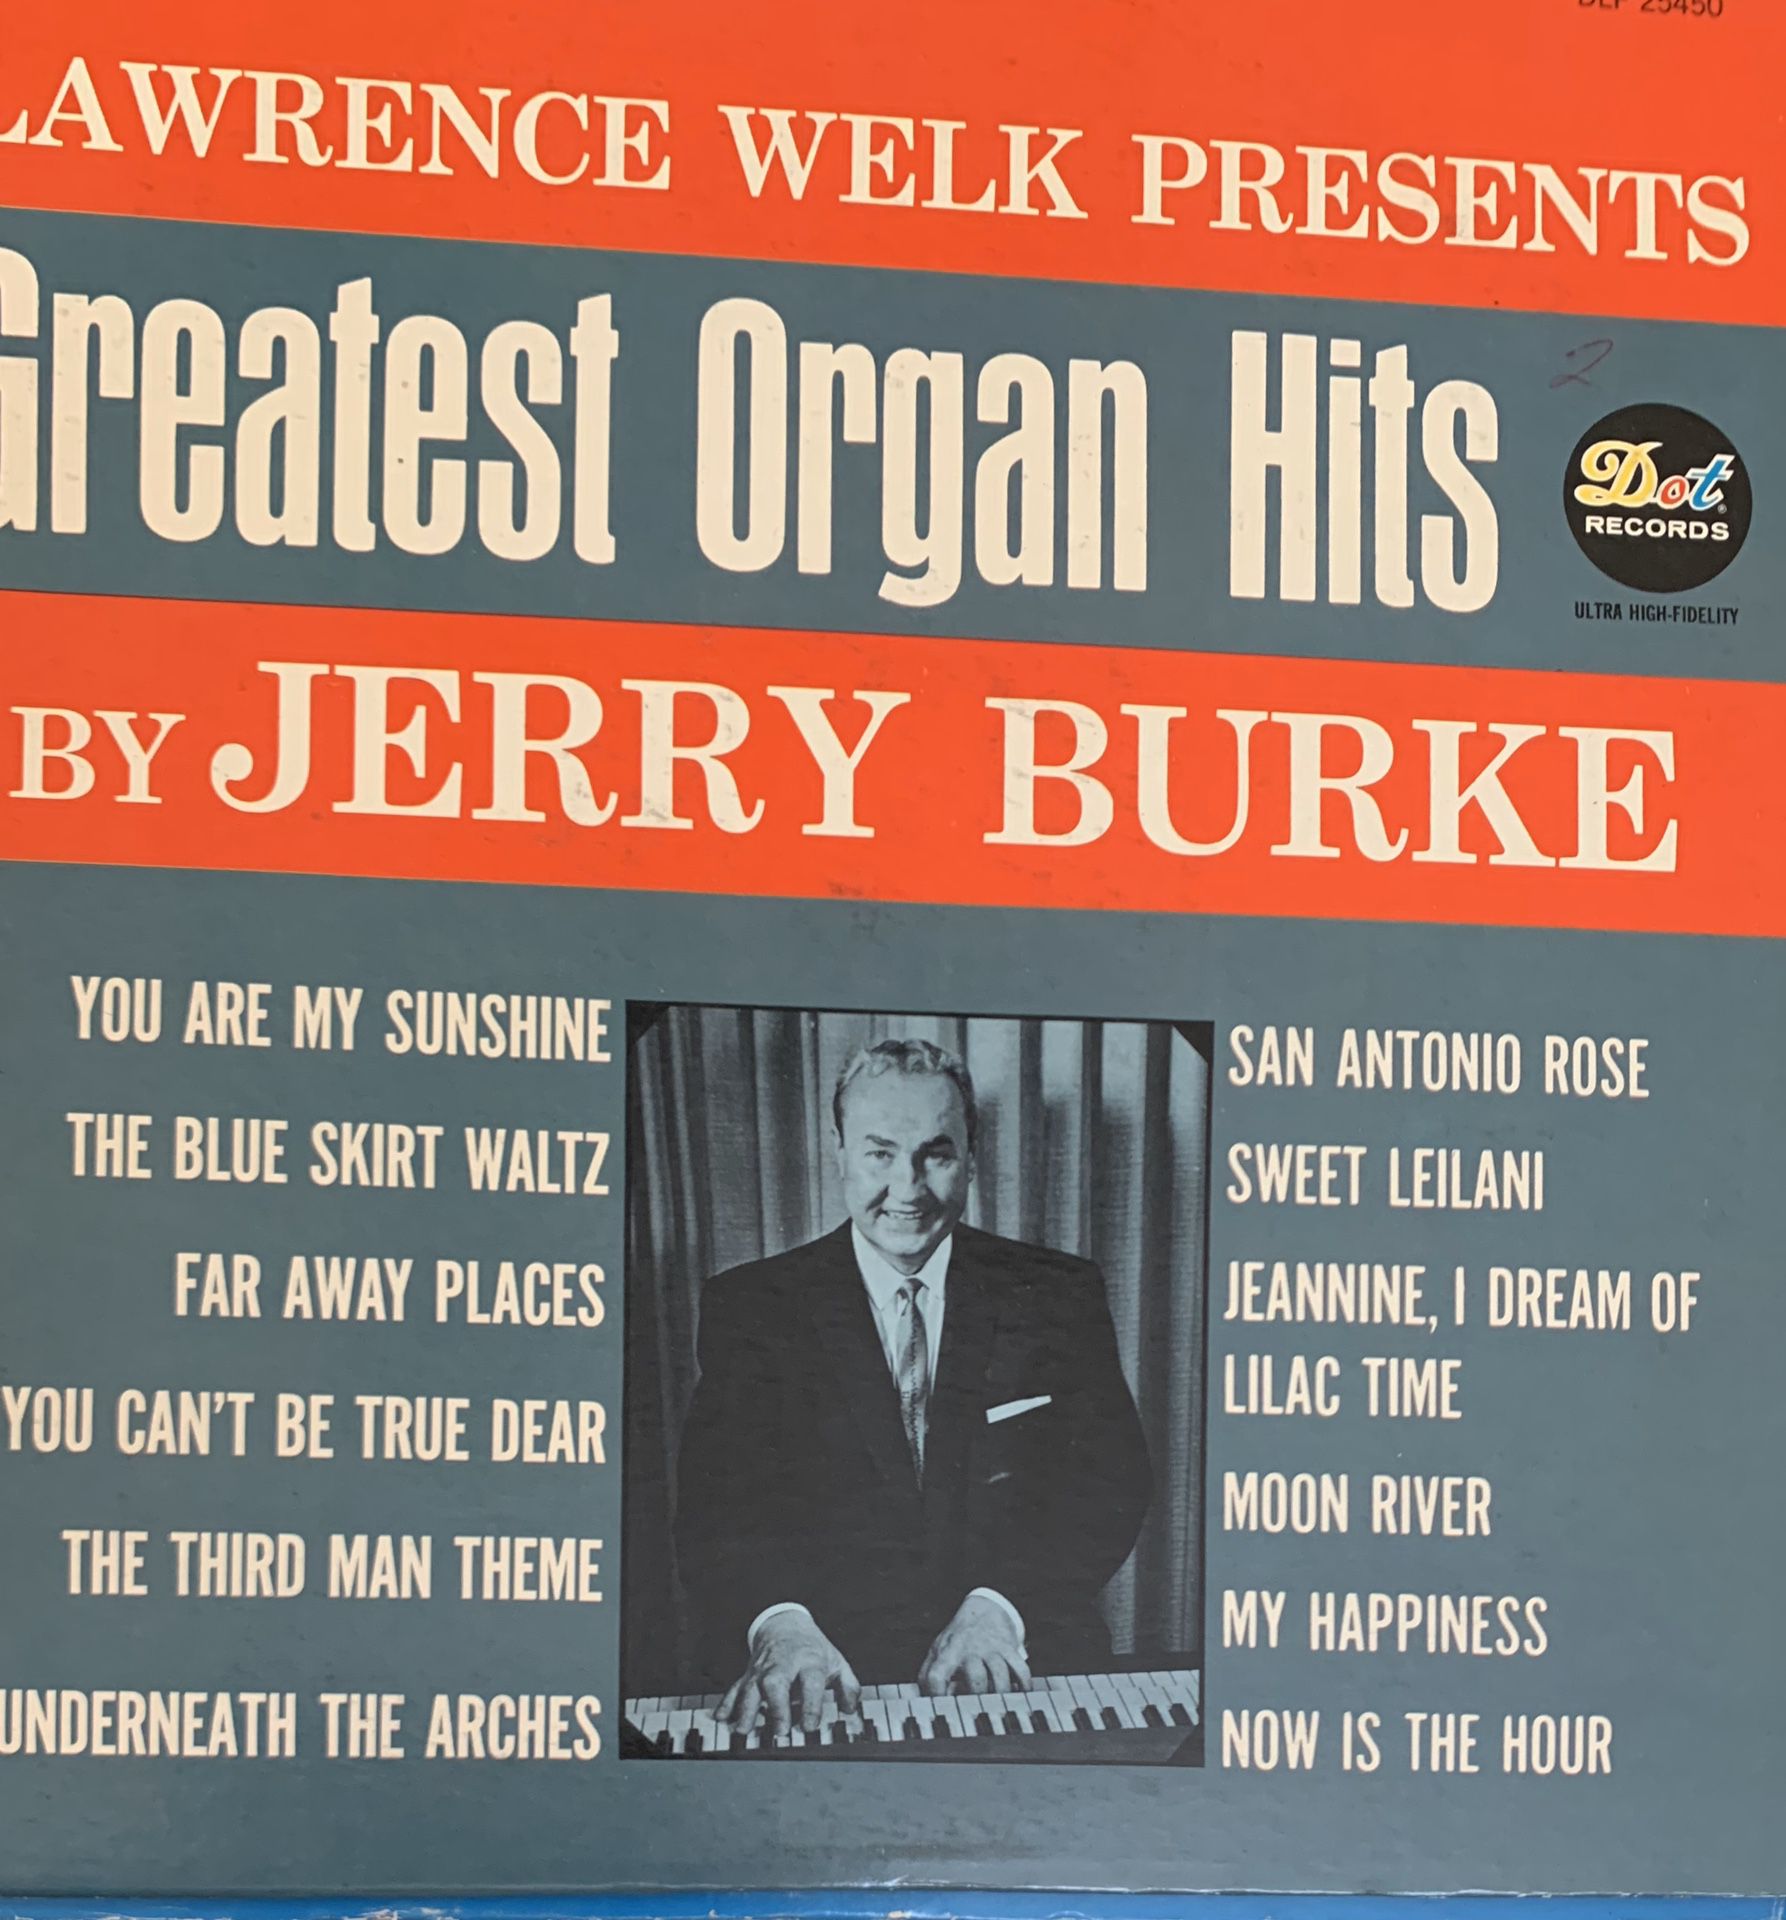 Greatest Organ by Jerry Burke double vinyls